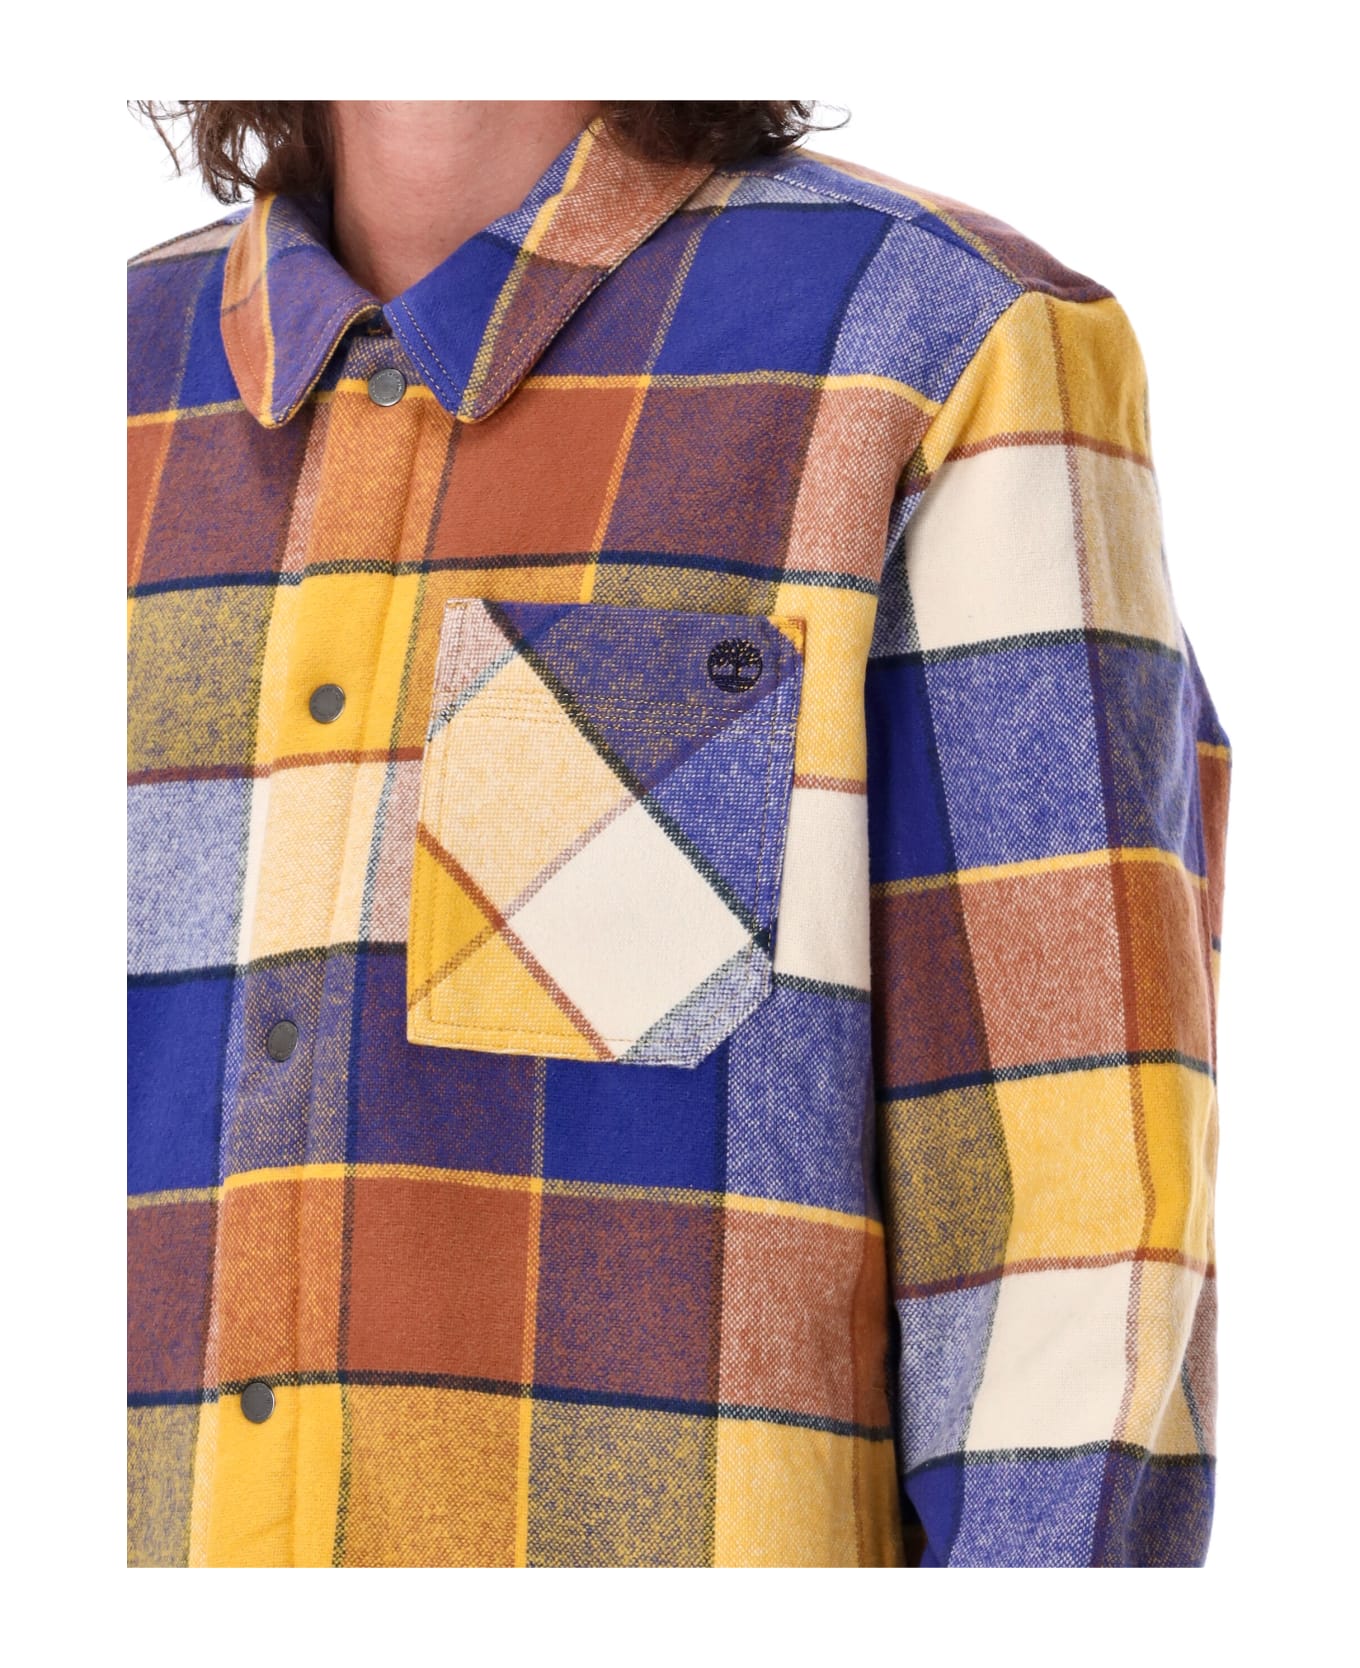 Timberland Check Shirt Jacket - ECRU CHECK